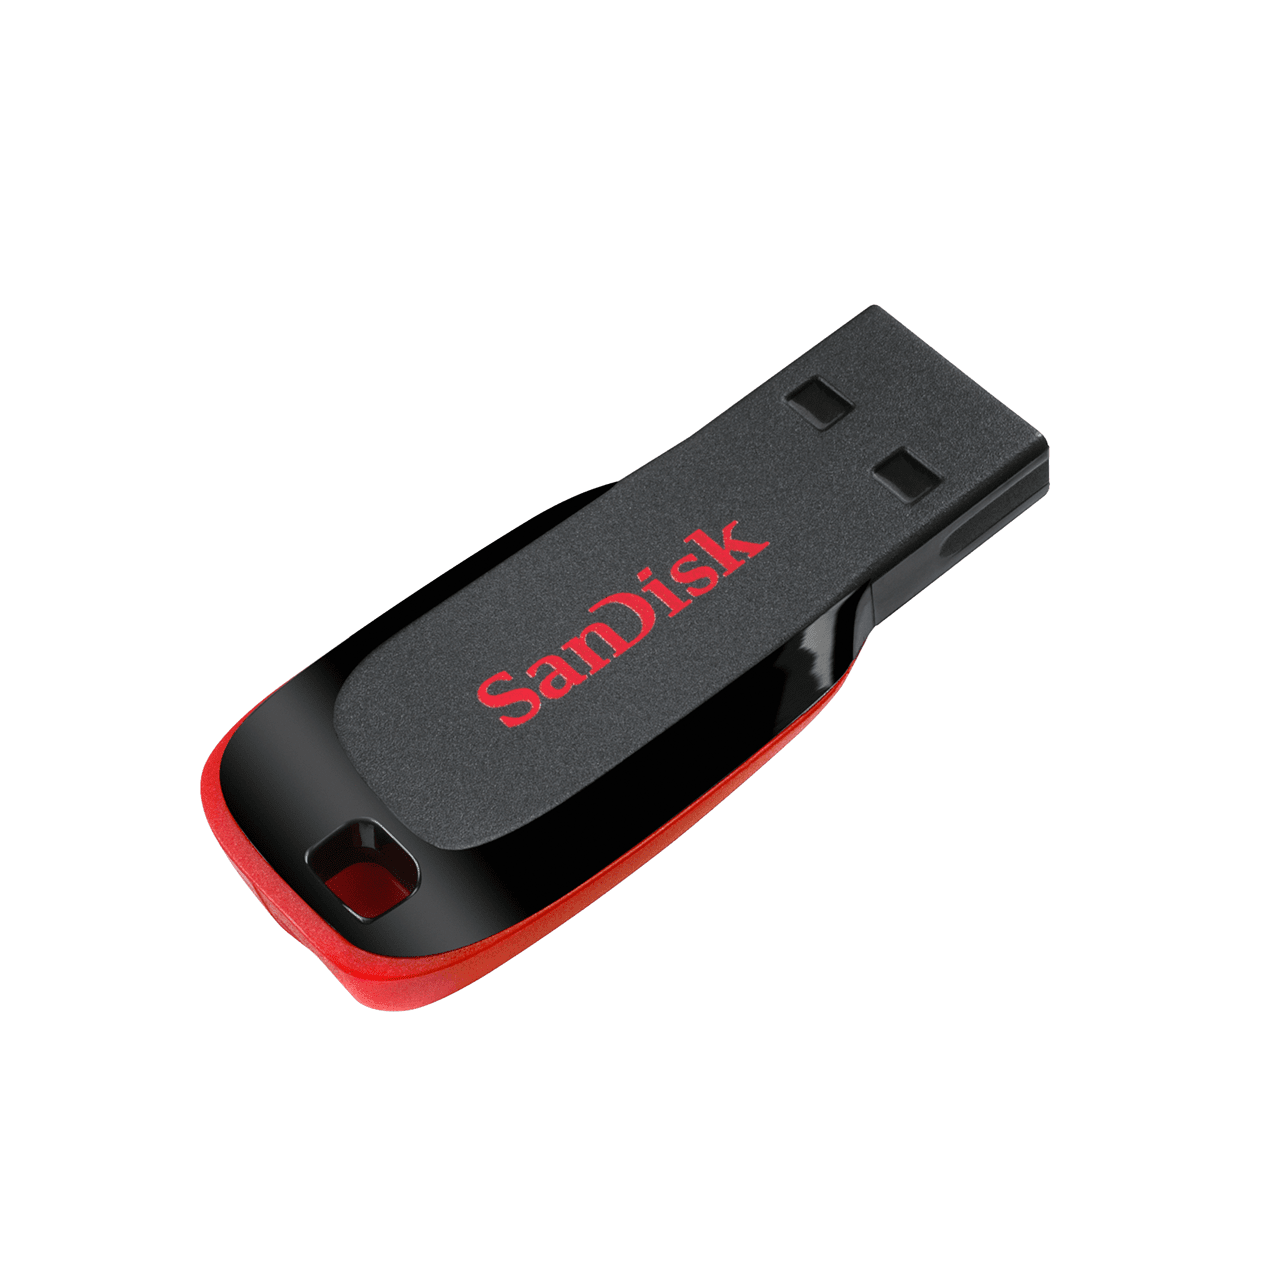 Sandisk Cruzer Blade 32Gb USB 2.0 Flash Drive